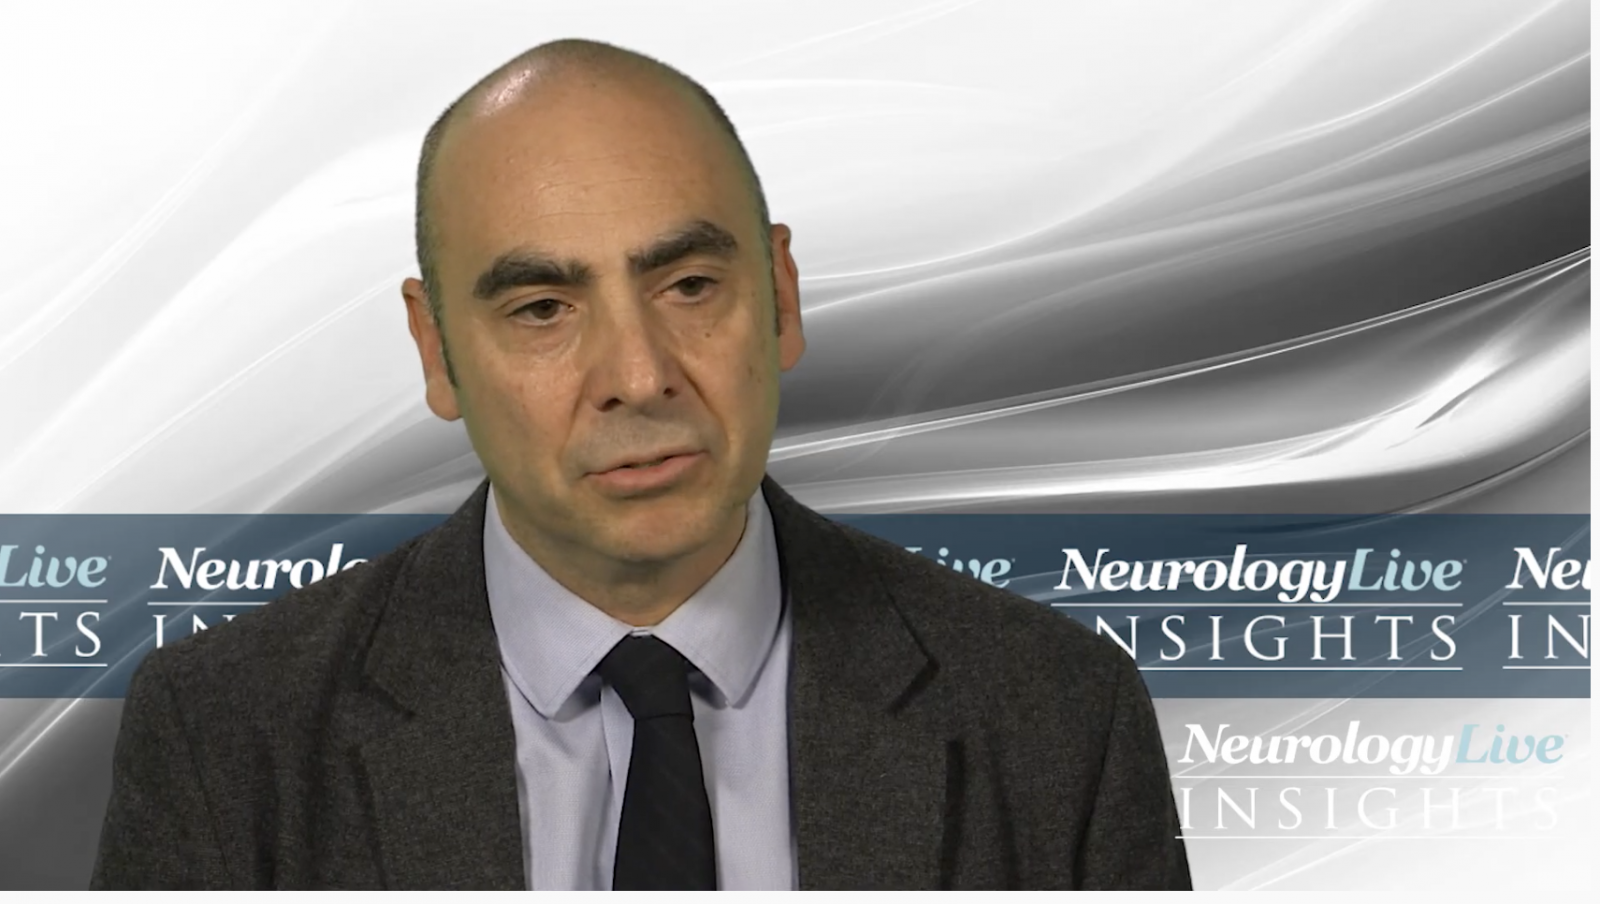 Management of Neurofibromatosis Type 1 with Plexiform Neurofibromas (NF1 with PNs)